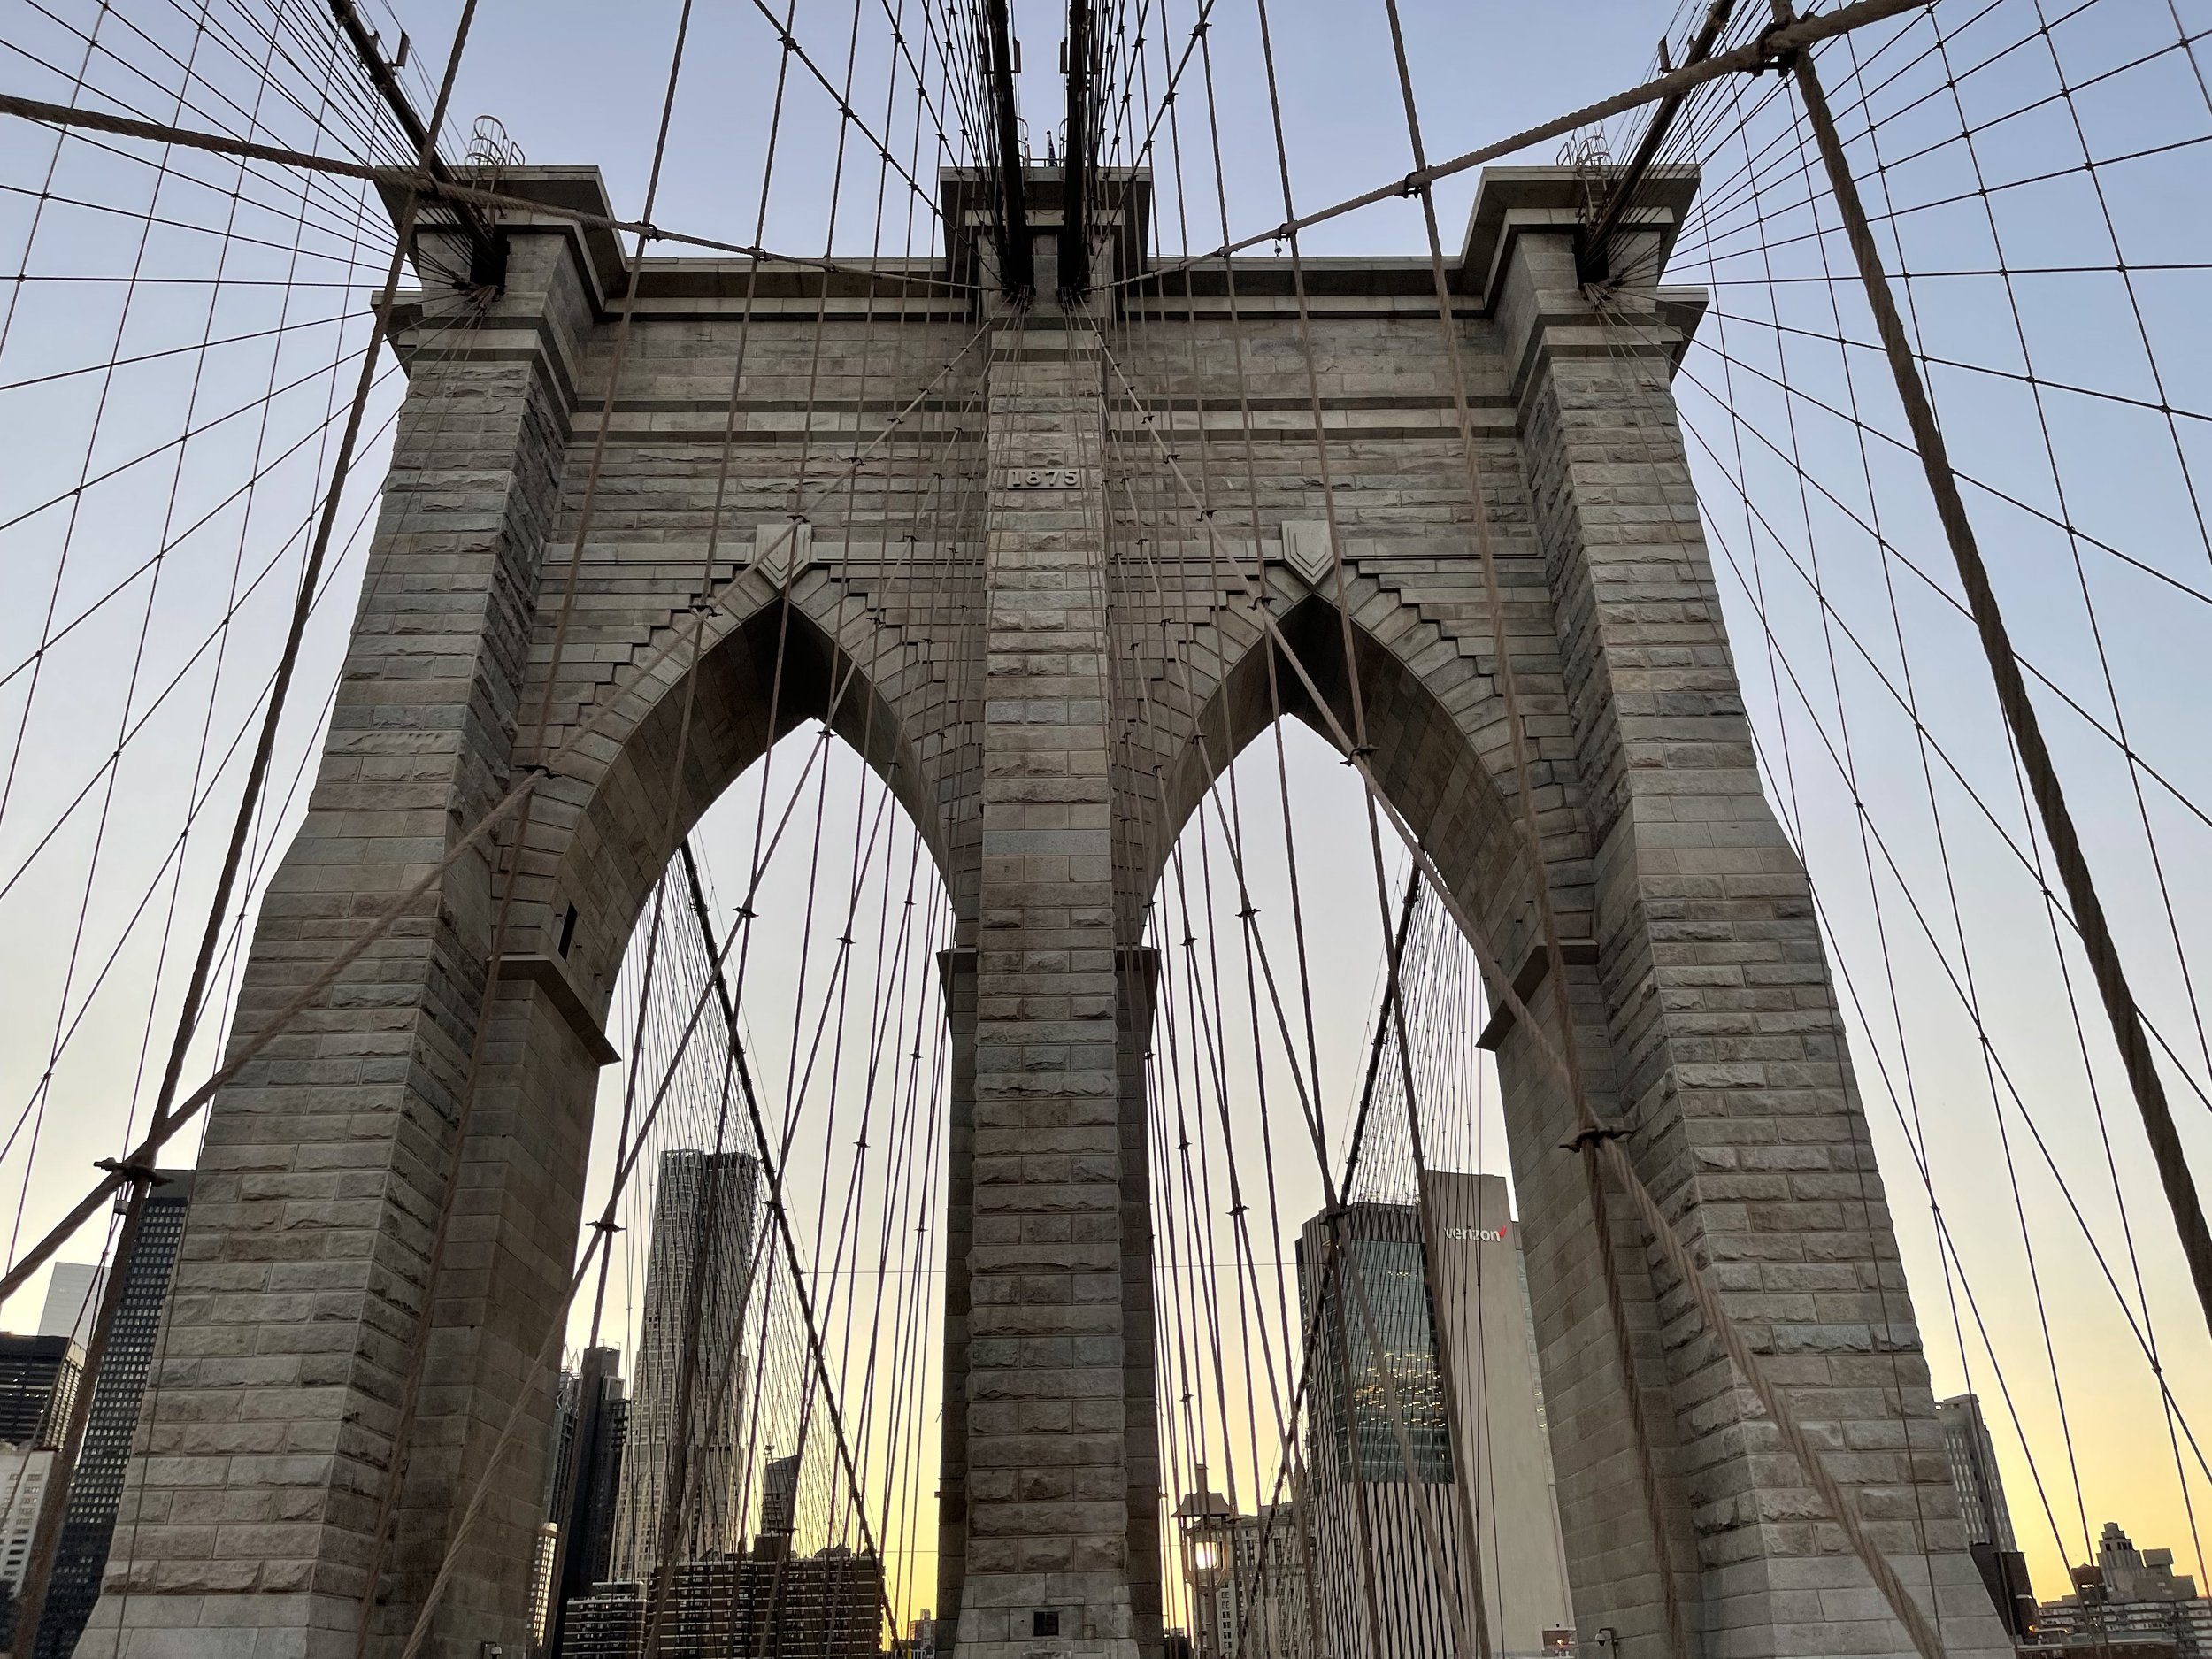 Geometry of the Brooklyn Bridge